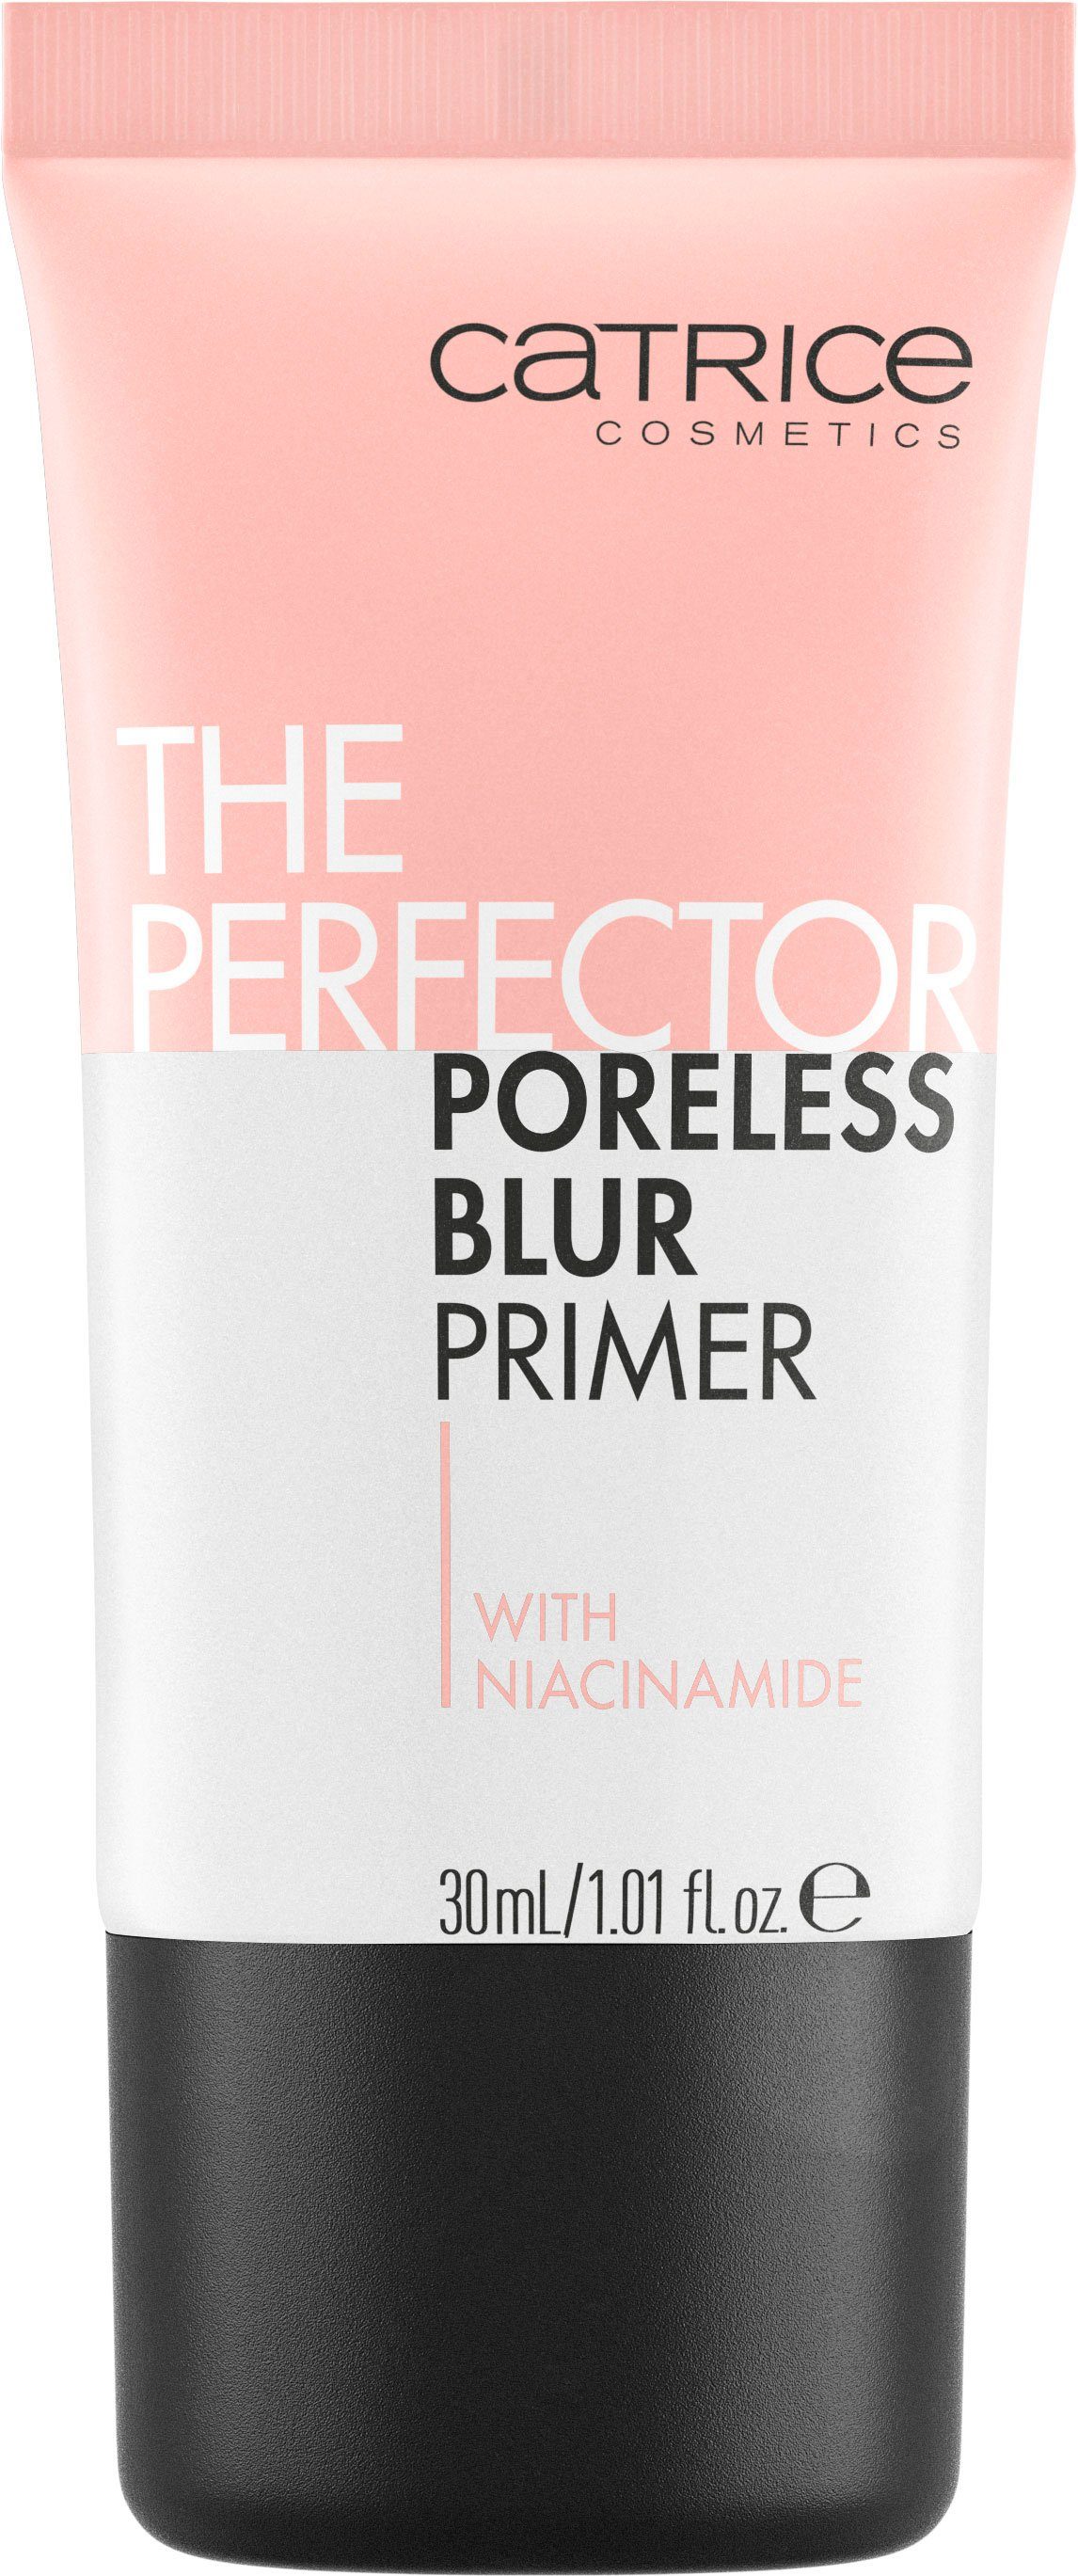 Catrice Primer The Perfector Primer, 3-tlg. Poreless Blur